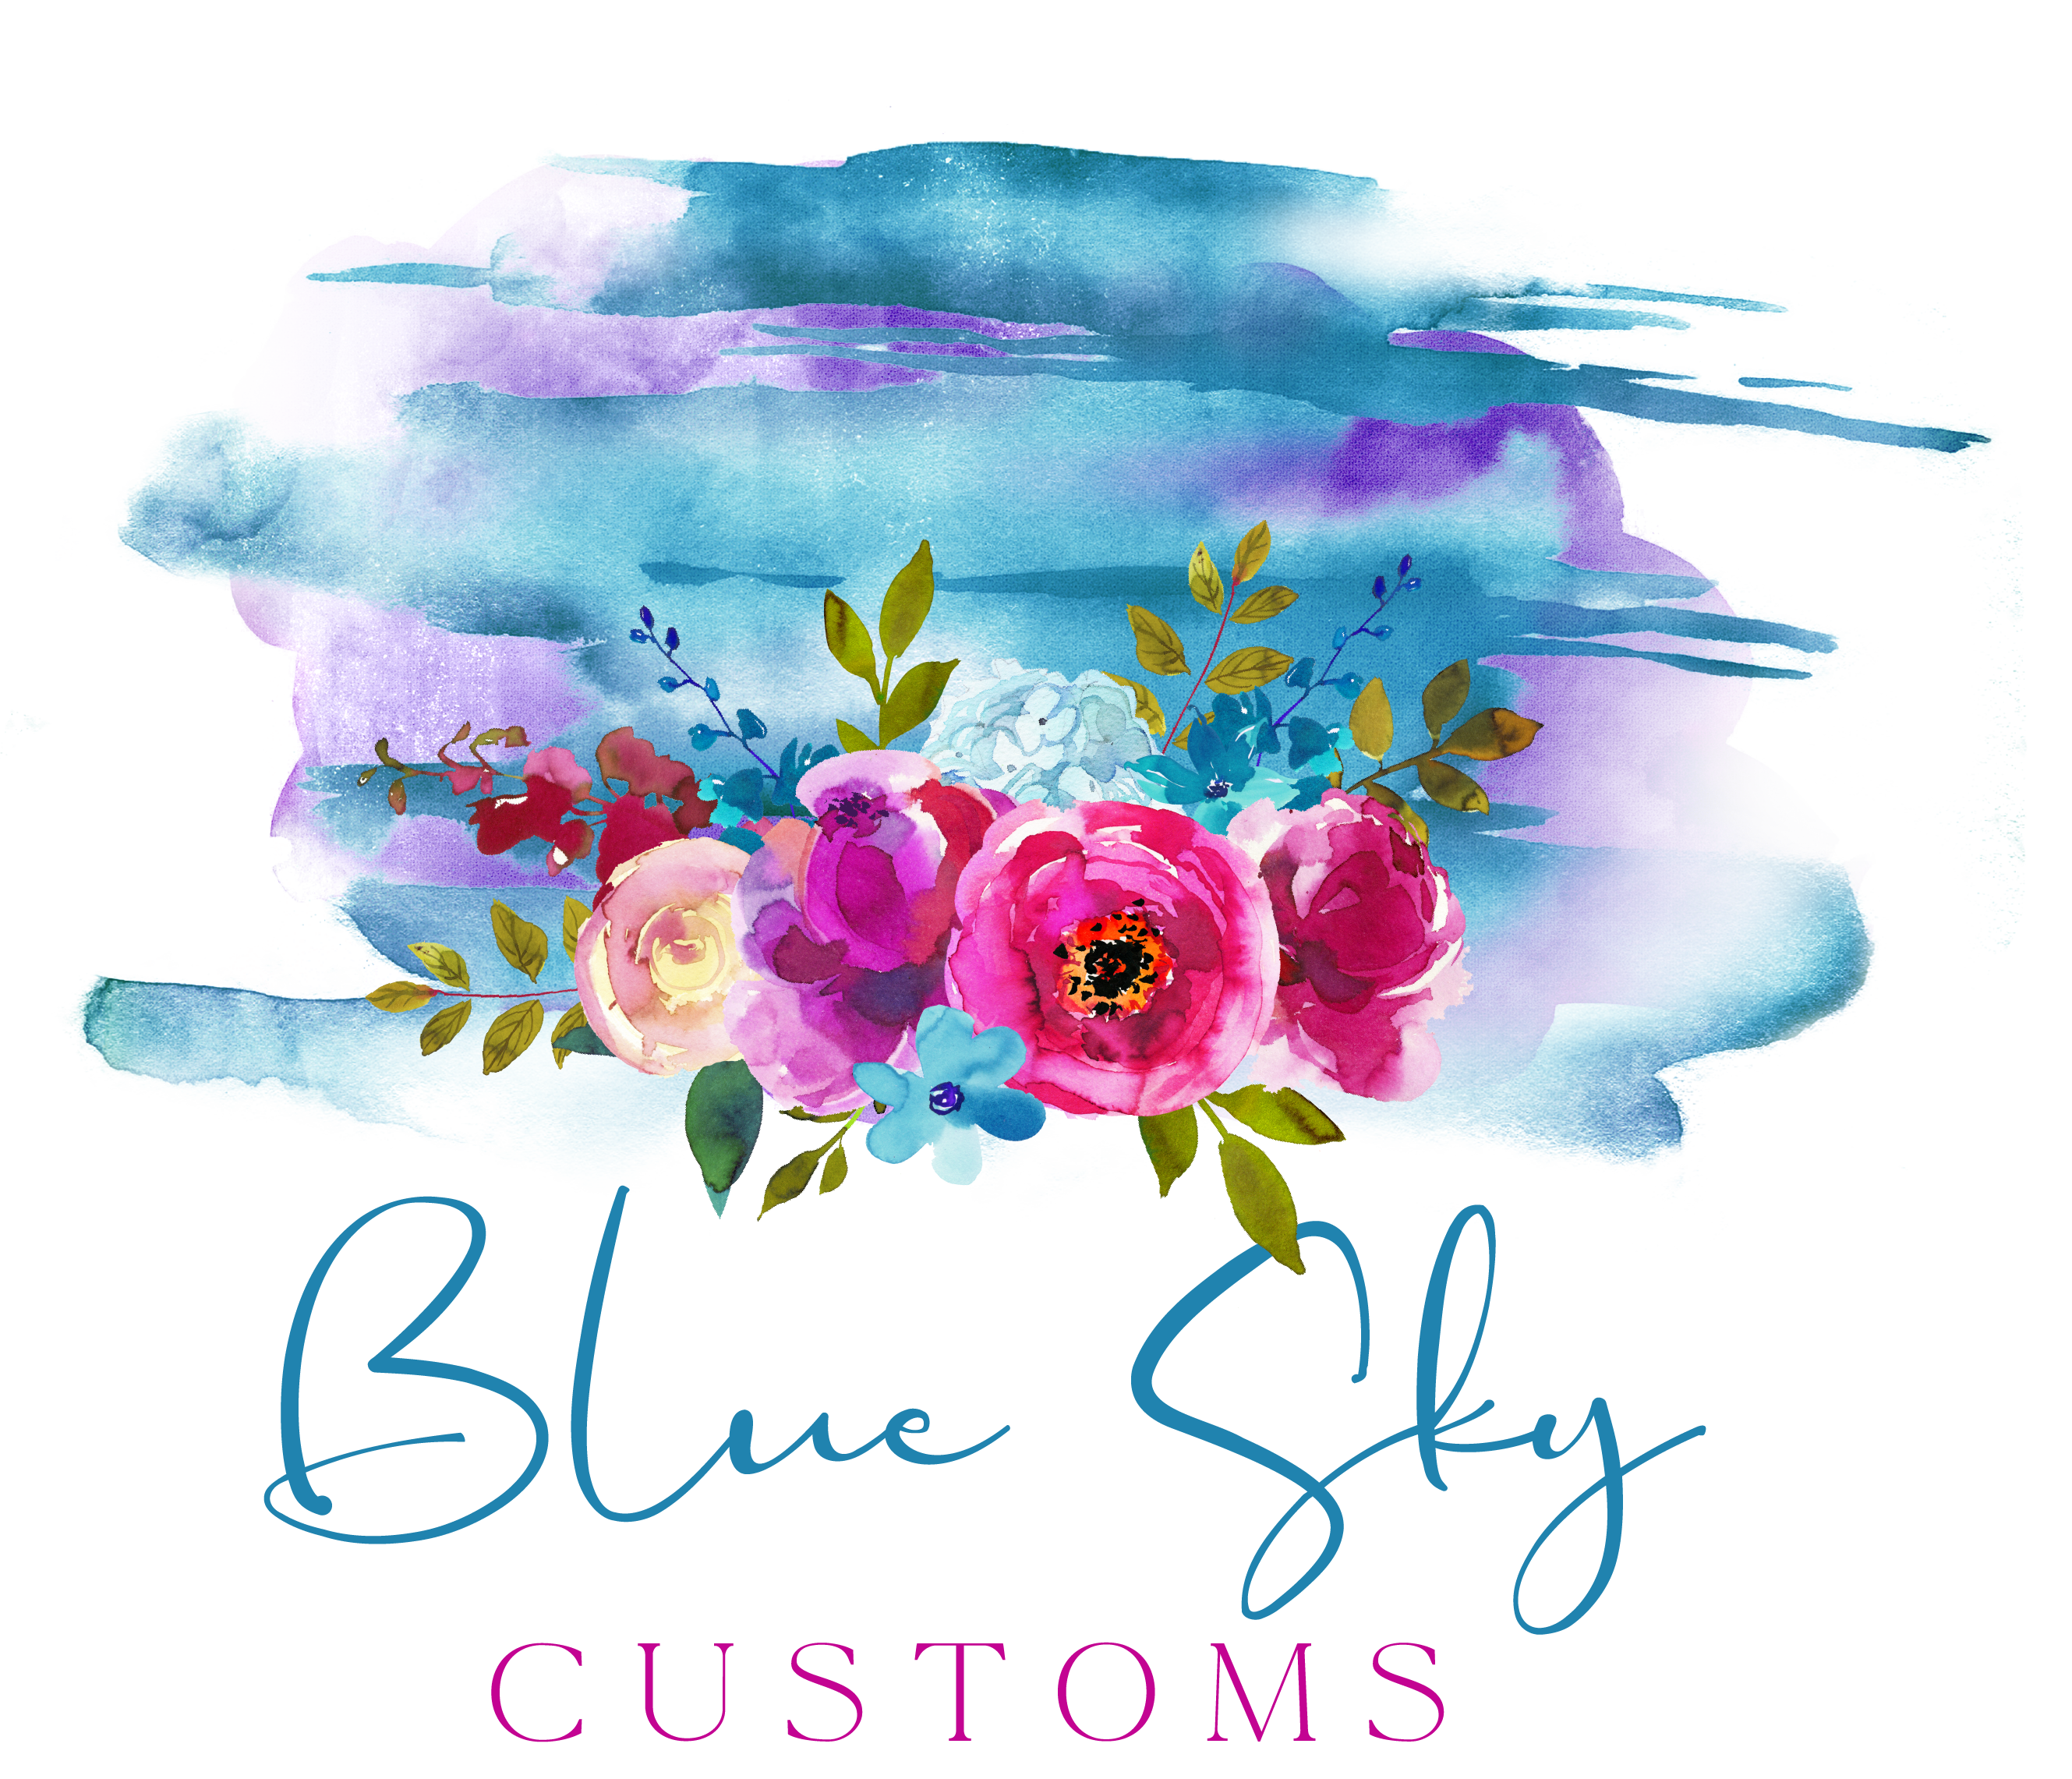 My Favorite Color Is Christmas Lights Tumbler – Blue Sky Customs